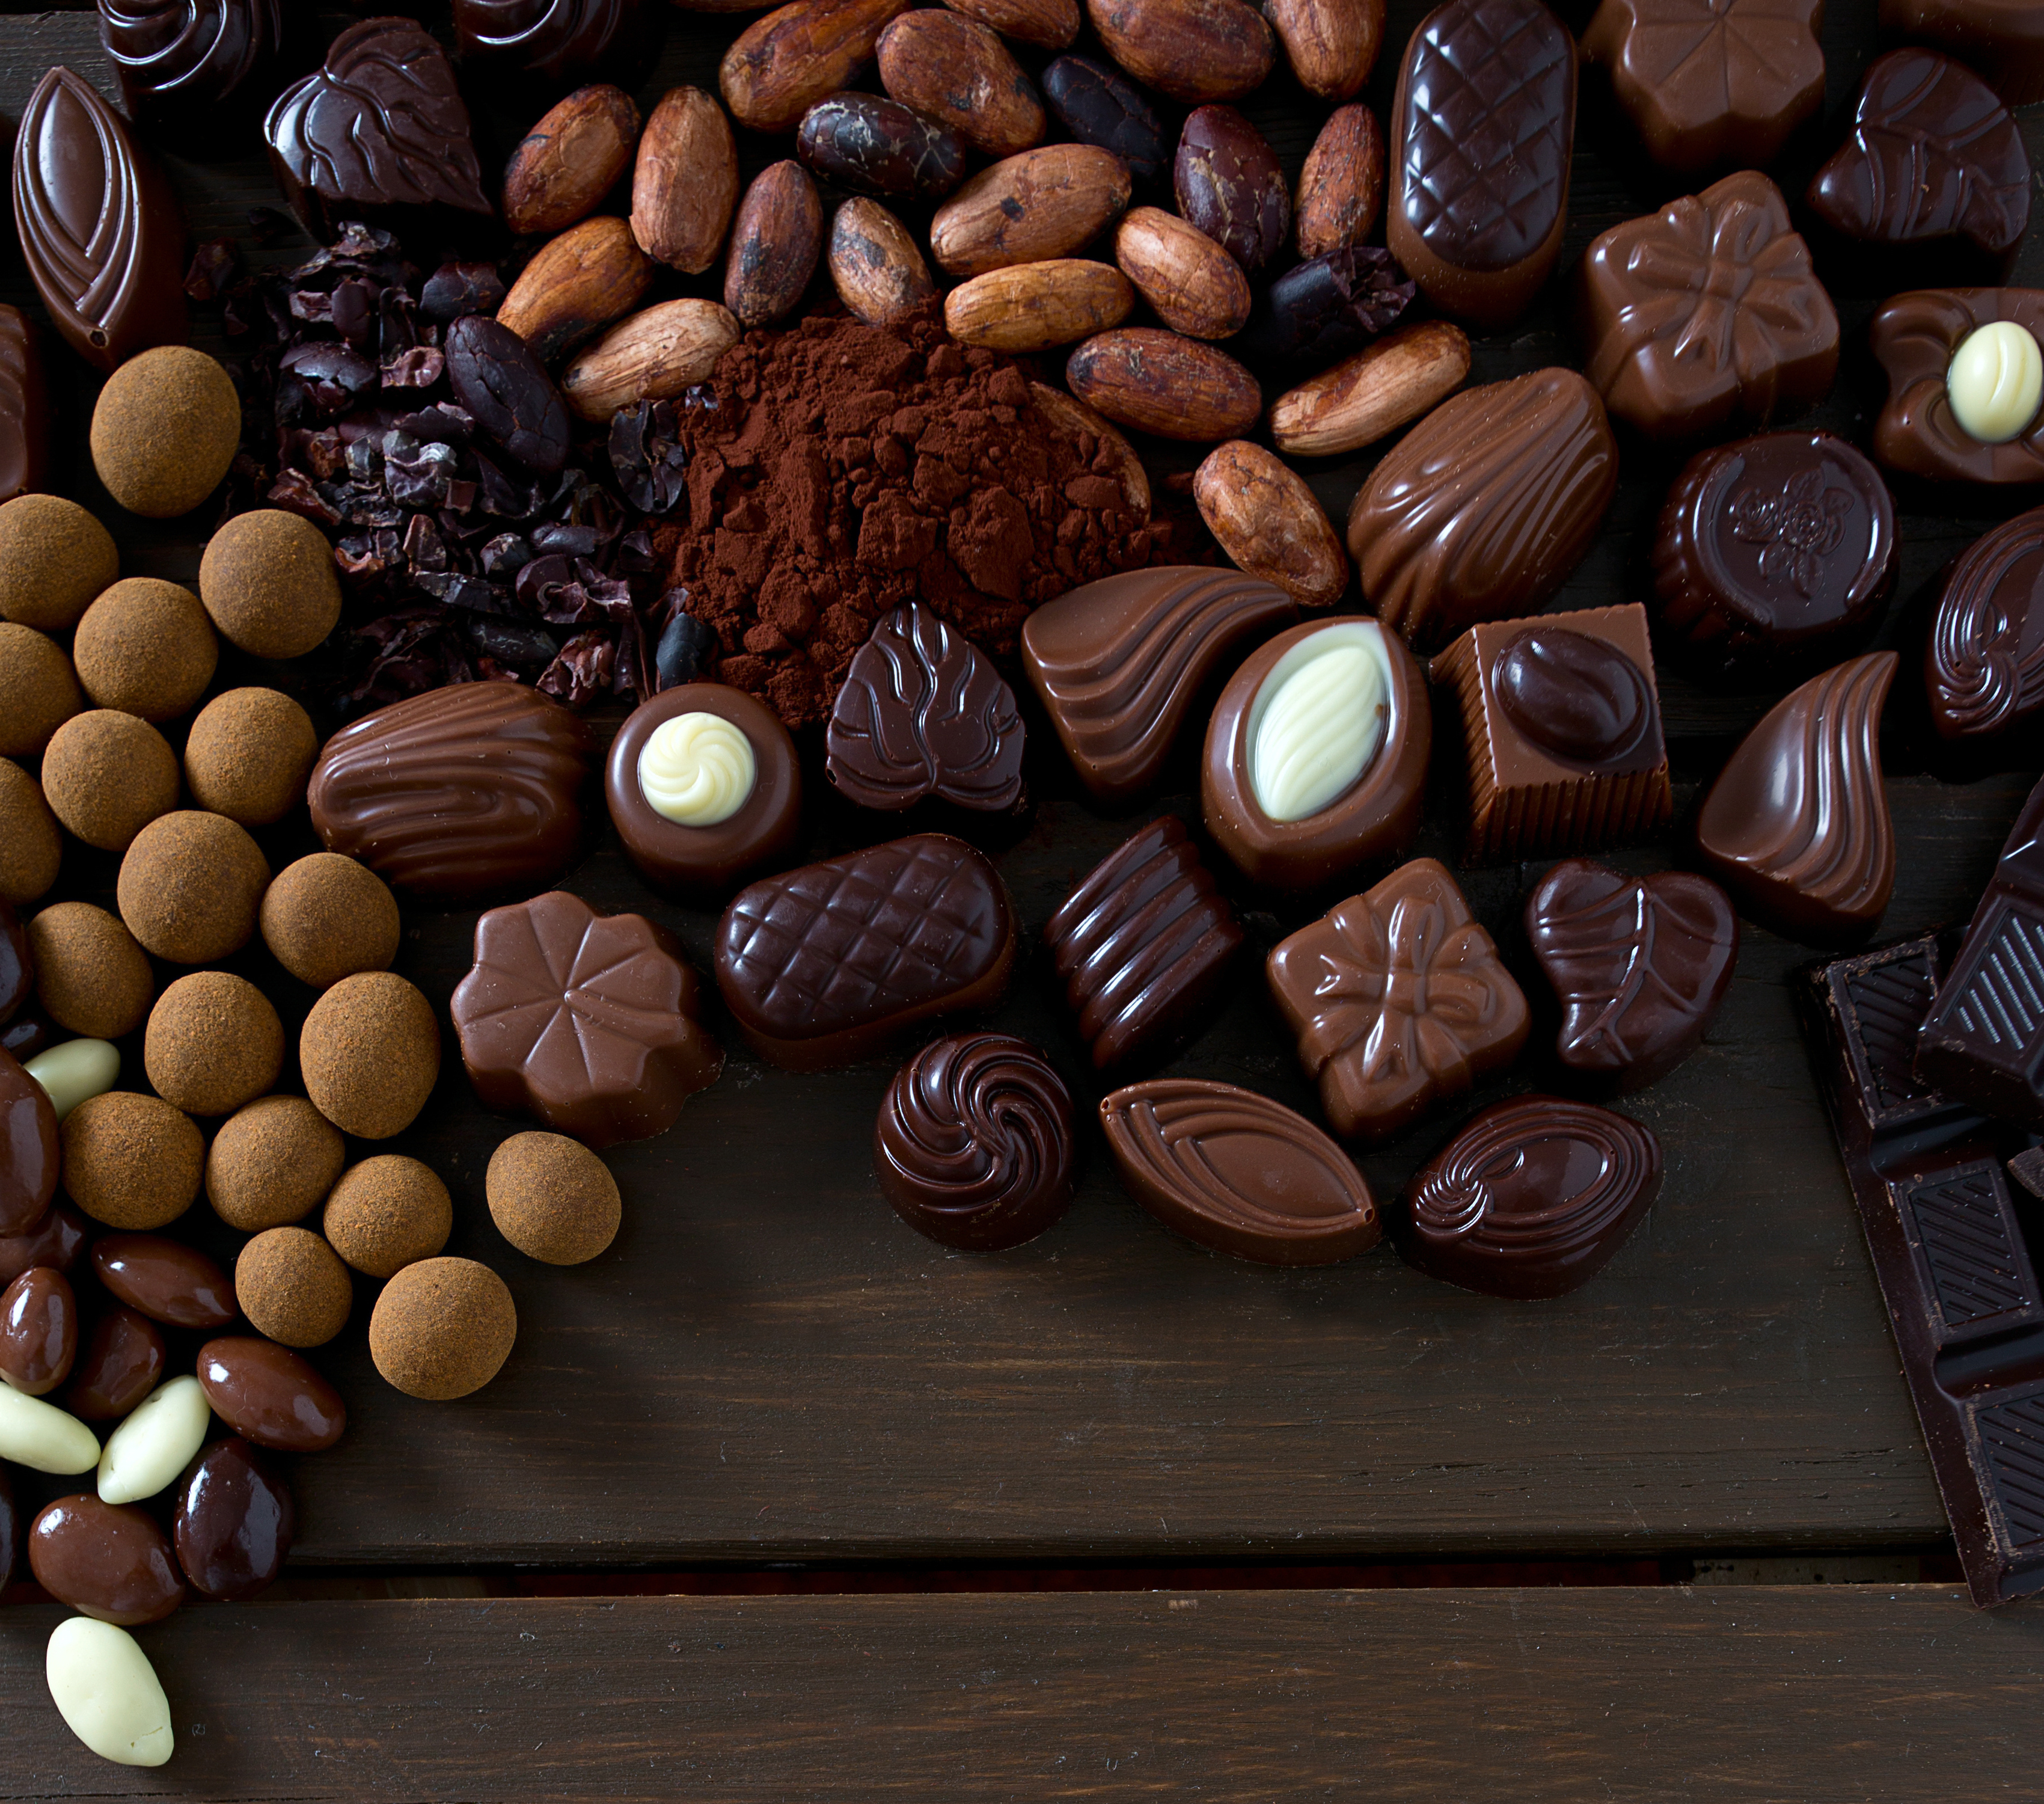 Шоколад столе. Шоколадные конфеты. Шоколад и шоколадные конфеты. Красивые конфеты. Шоколадные конфеты россыпью.